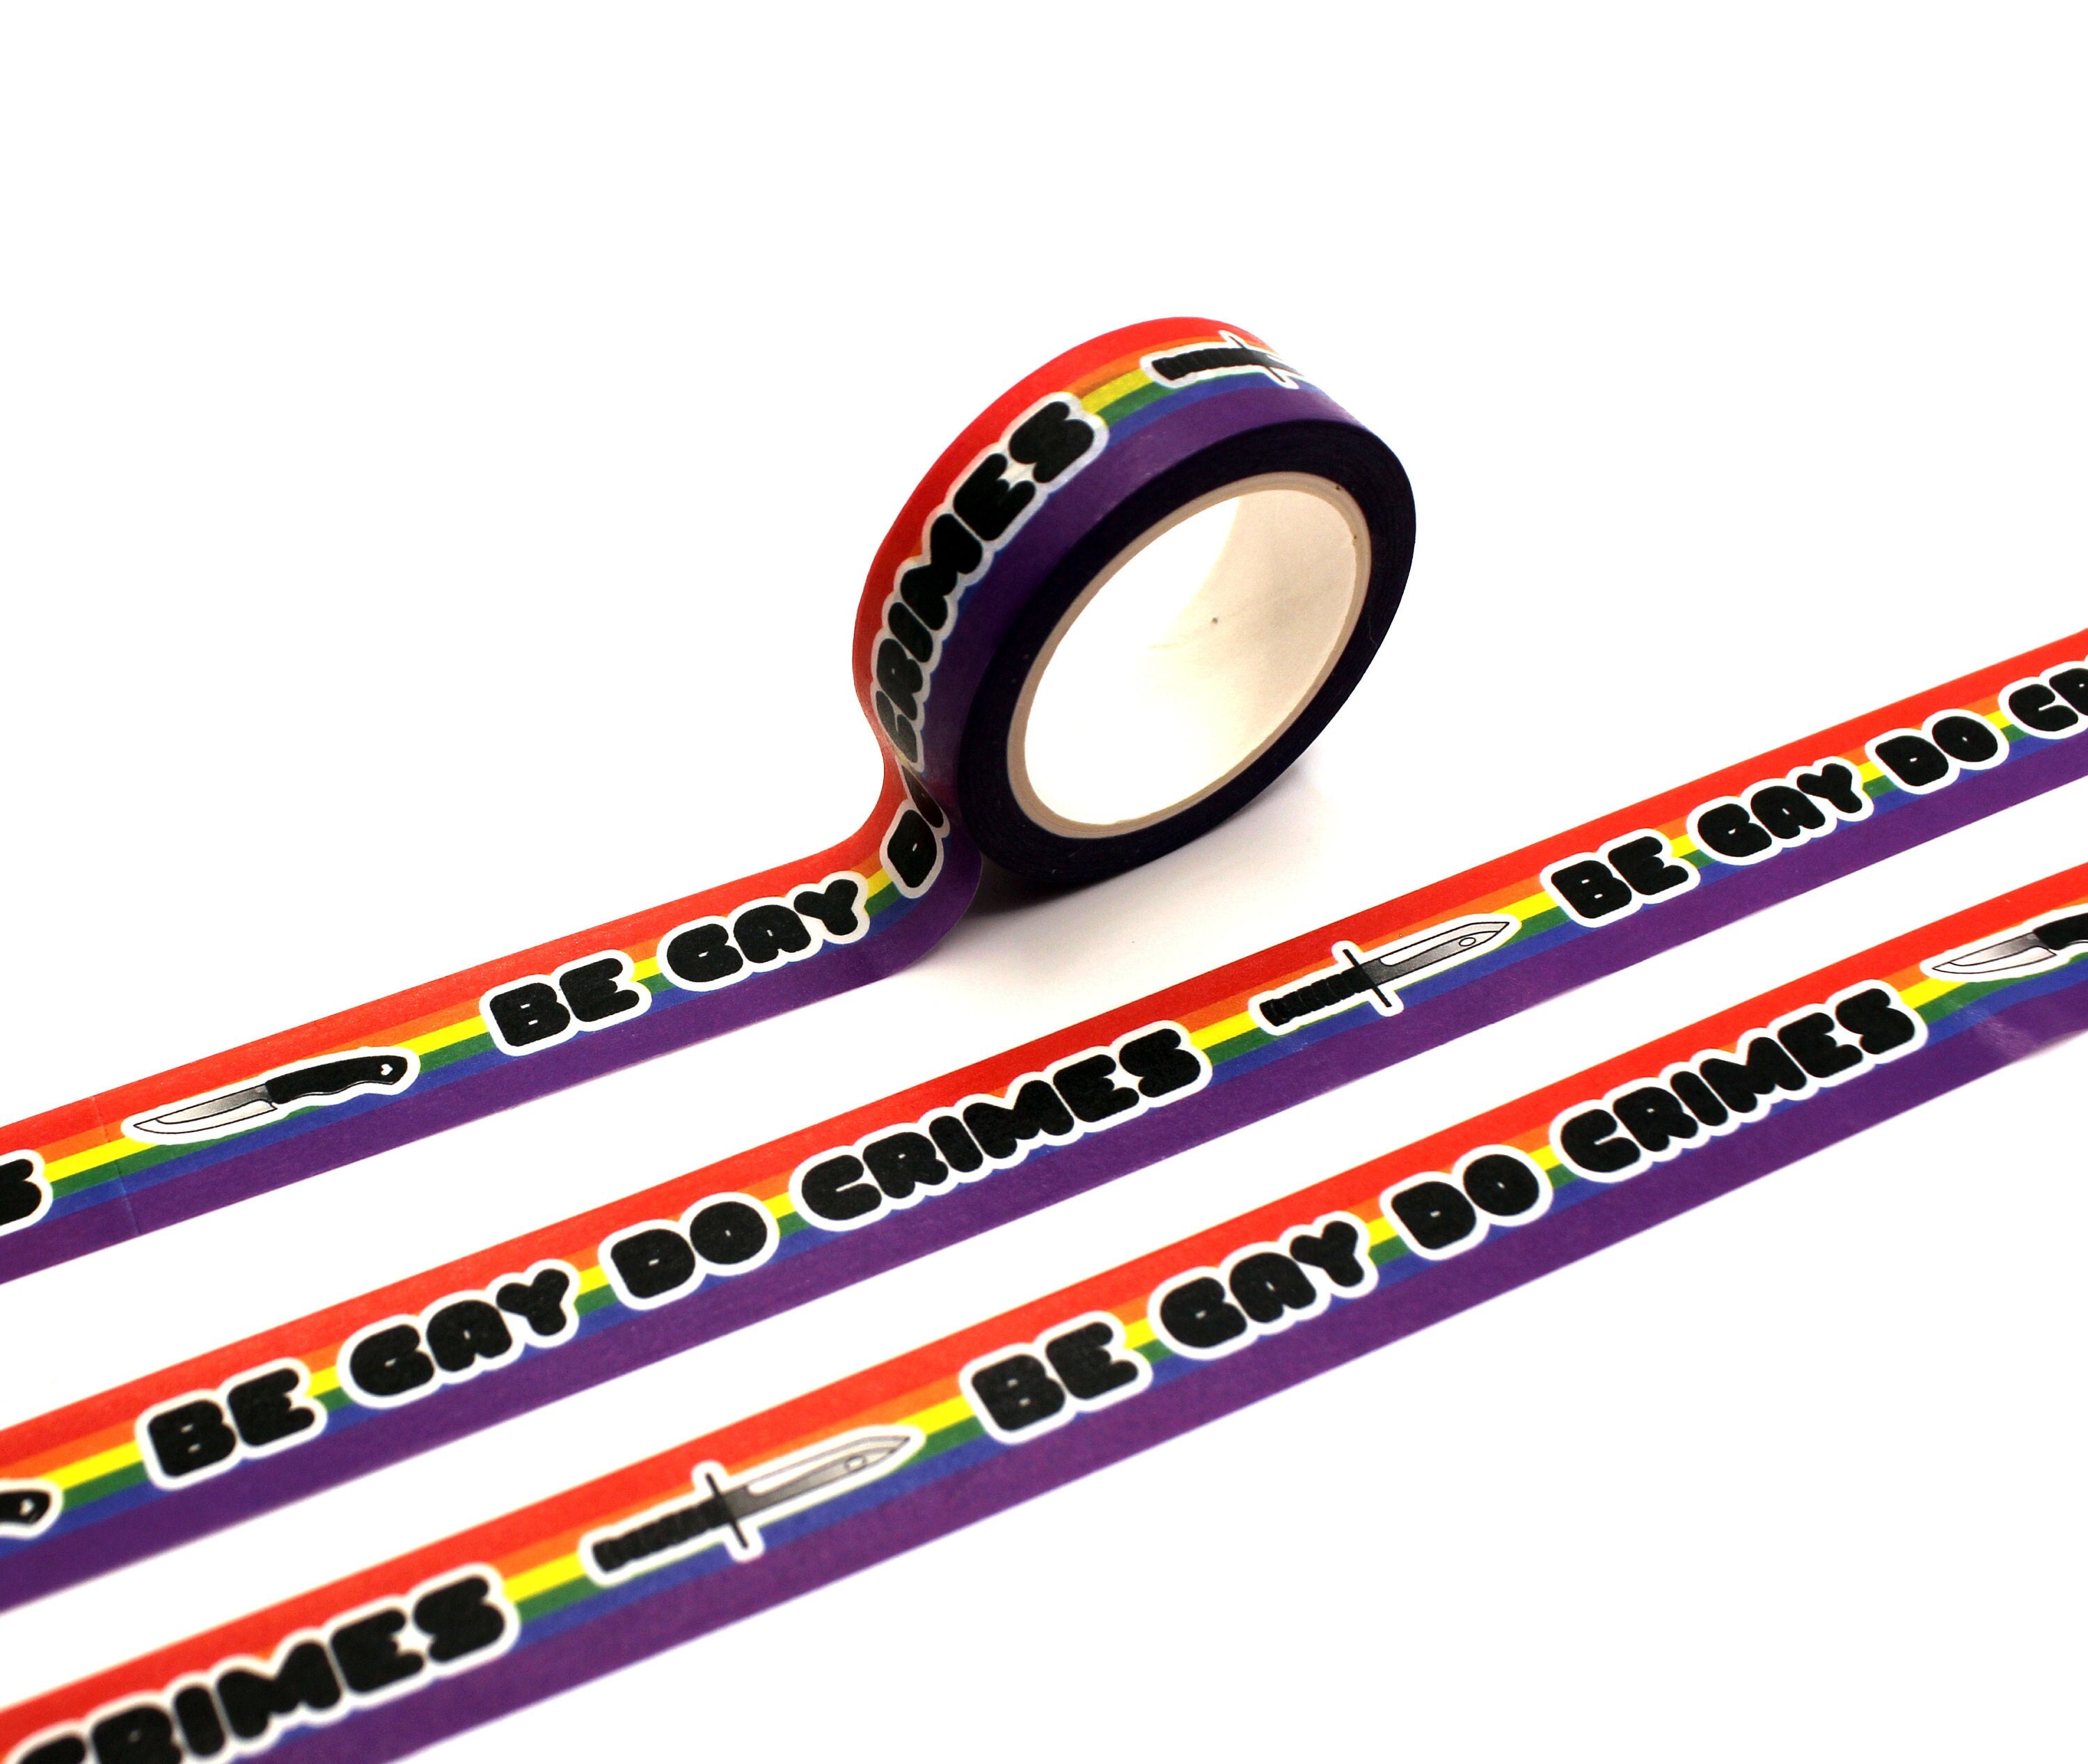 Rainbow Washi Tape 10m Craft Supplies Decorative Masking Tape Creative  Journalling Tape Party Supplies Multipurpose Washi Tape 